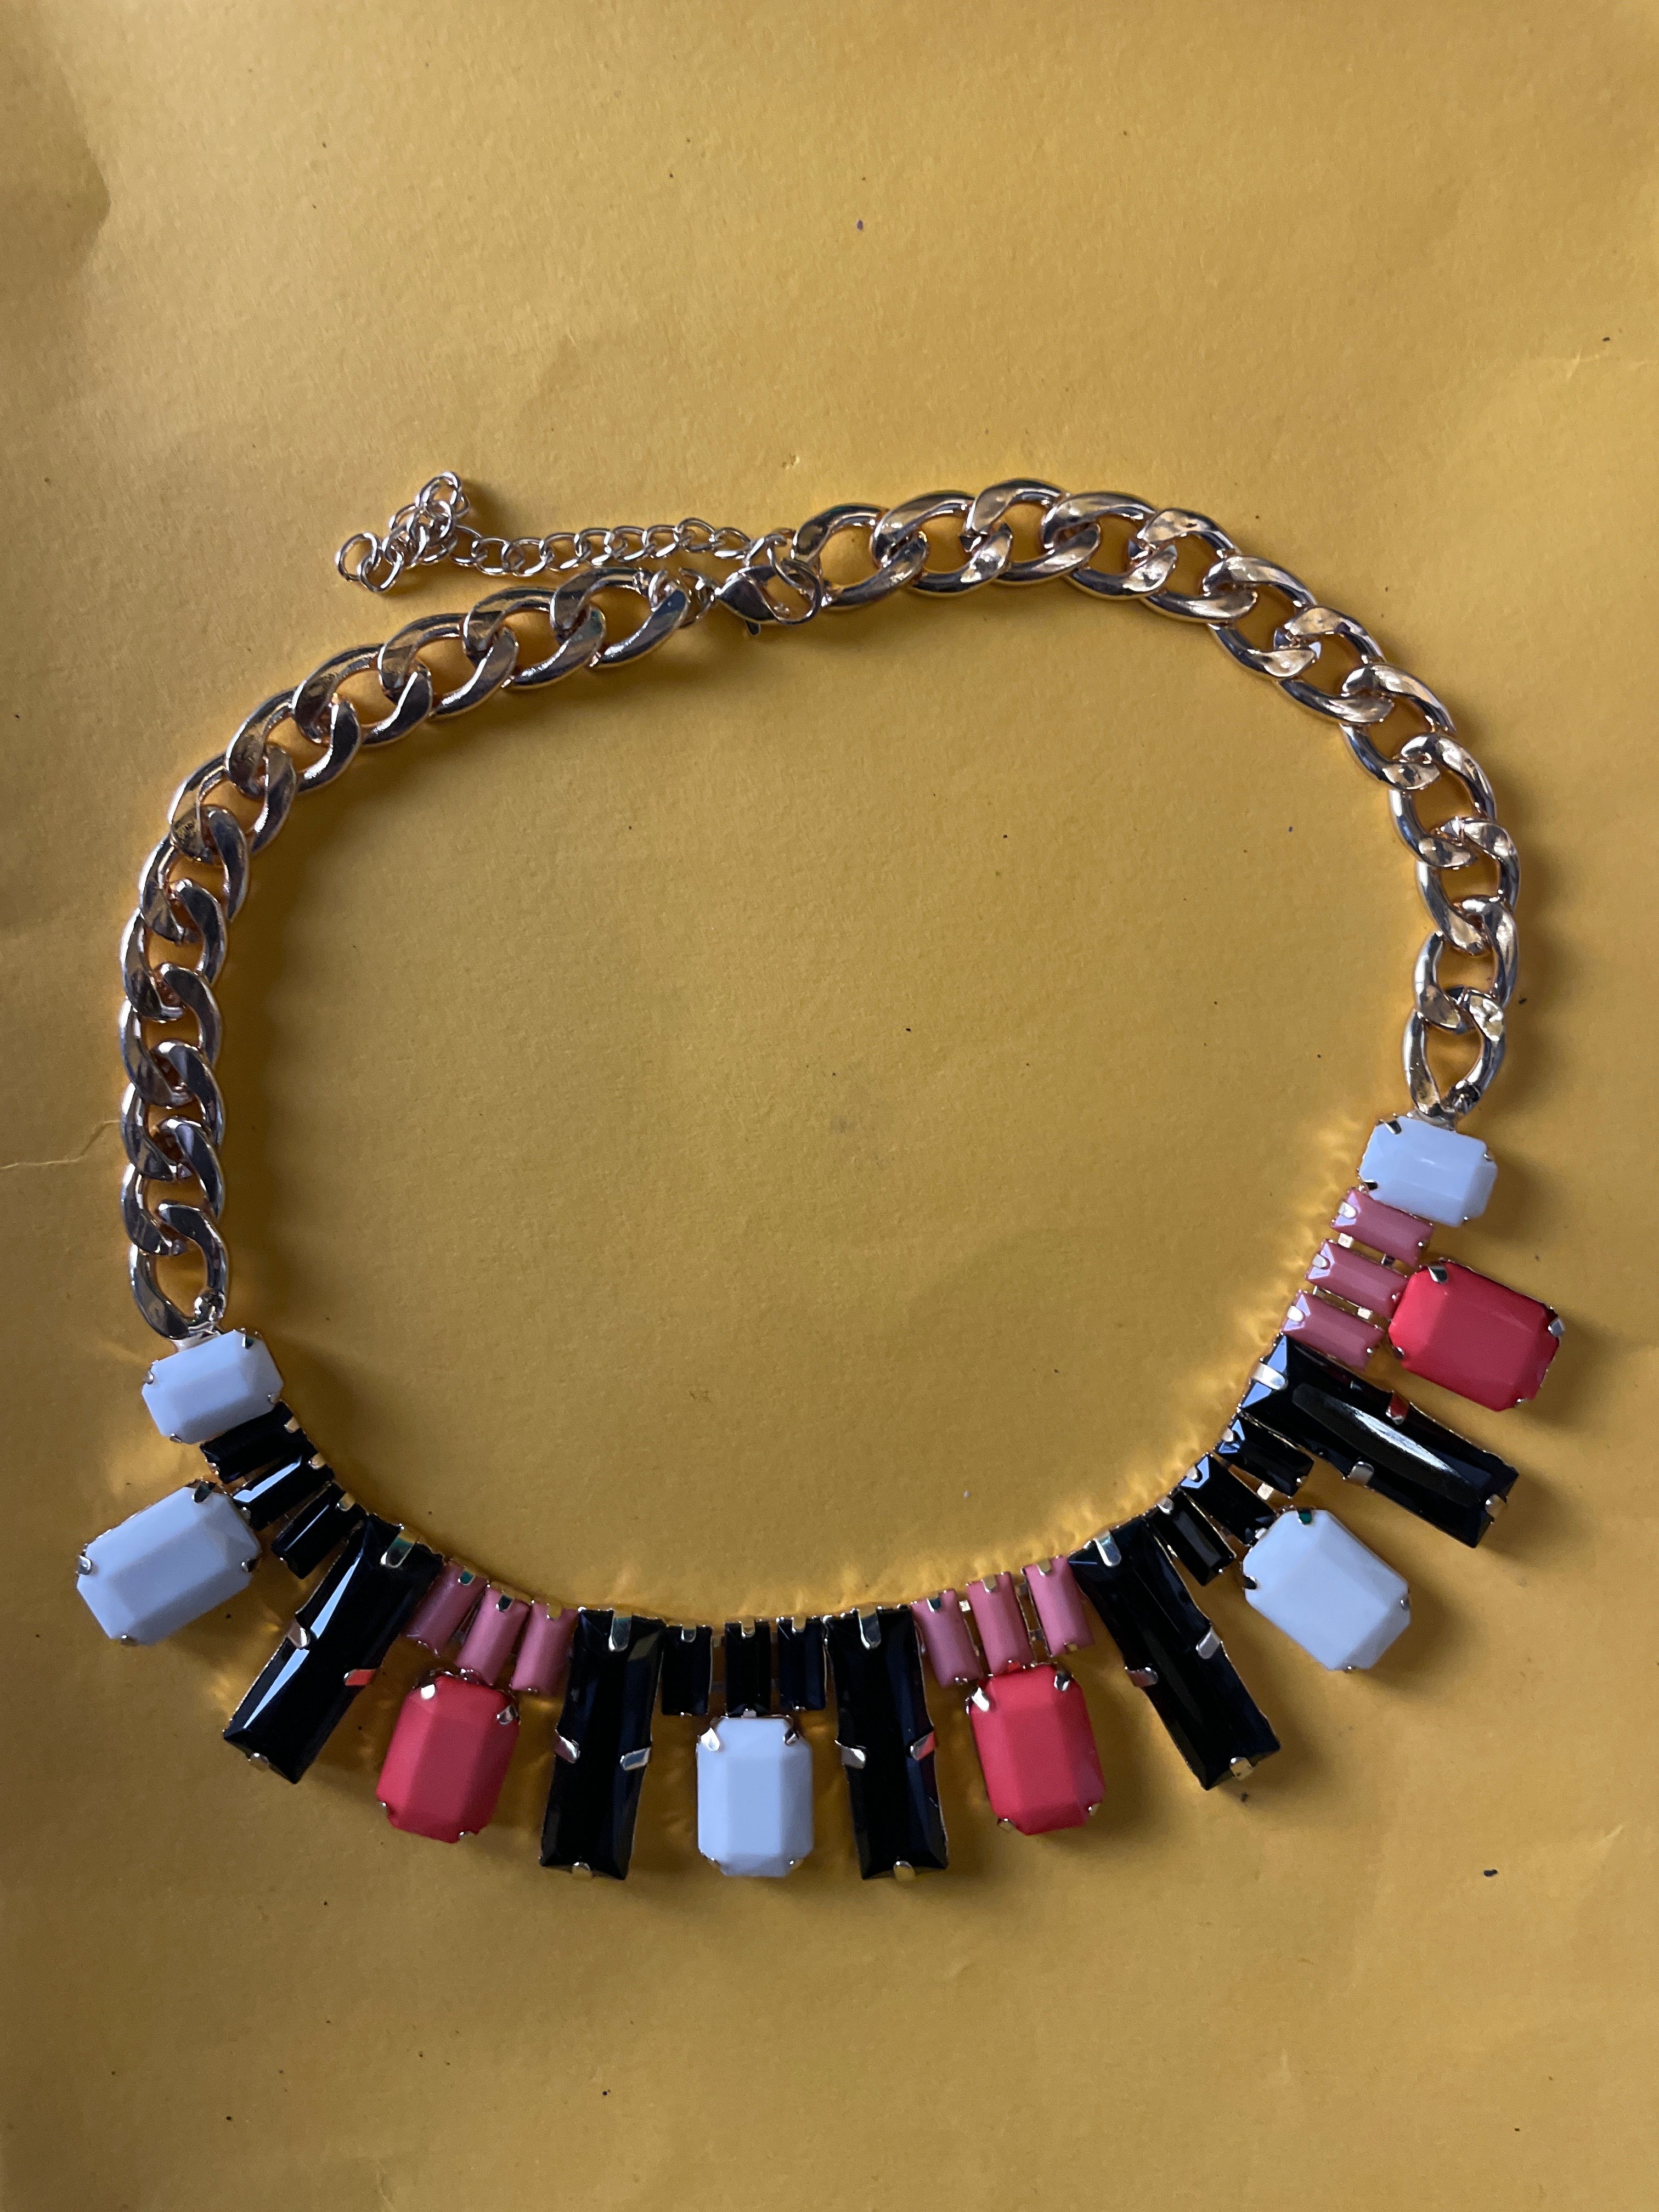 GOAH Gold chain women's necklace with multi color pendant